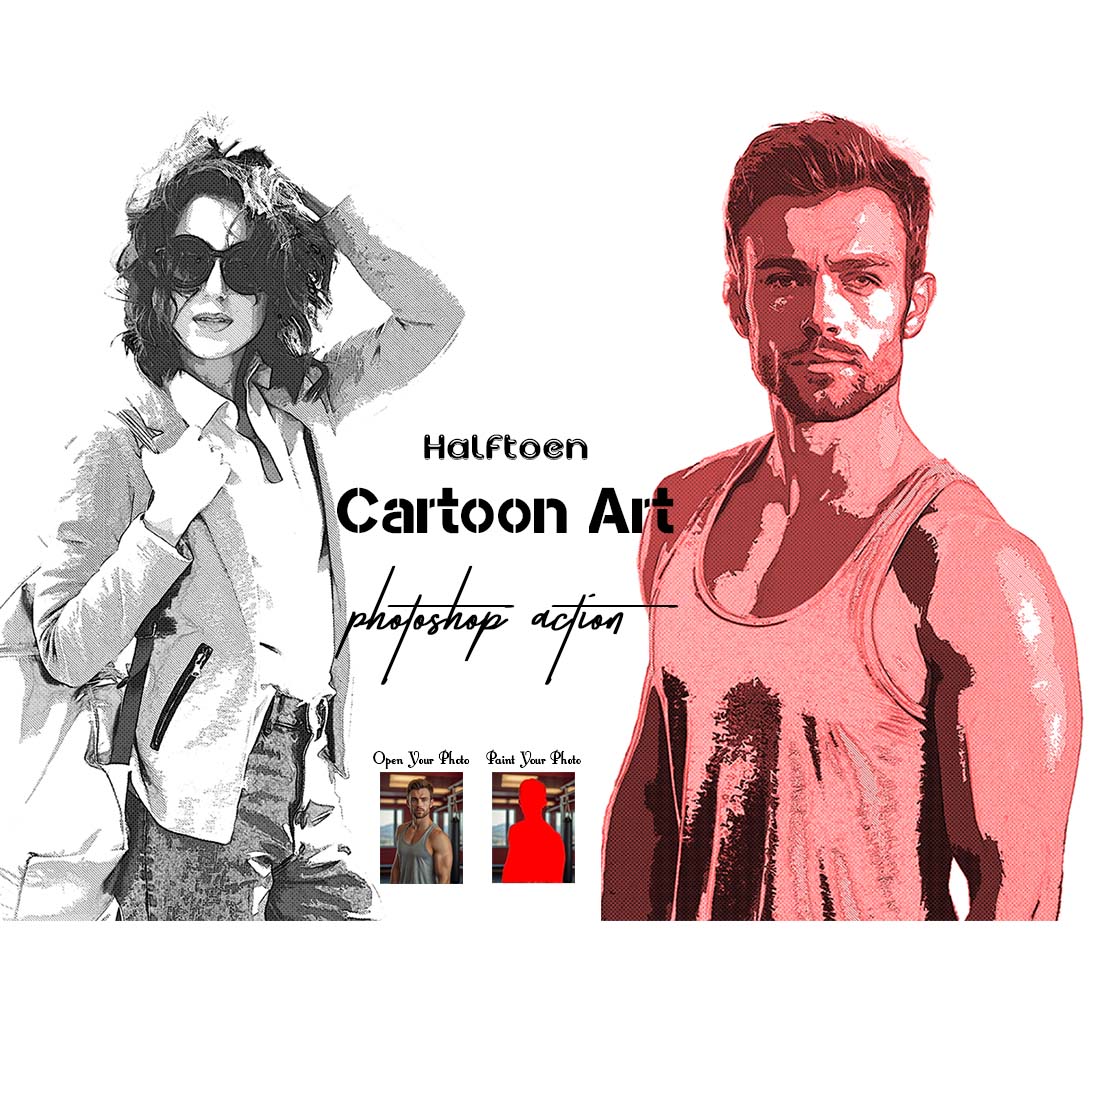 Halftone Cartoon Art Photoshop Action cover image.